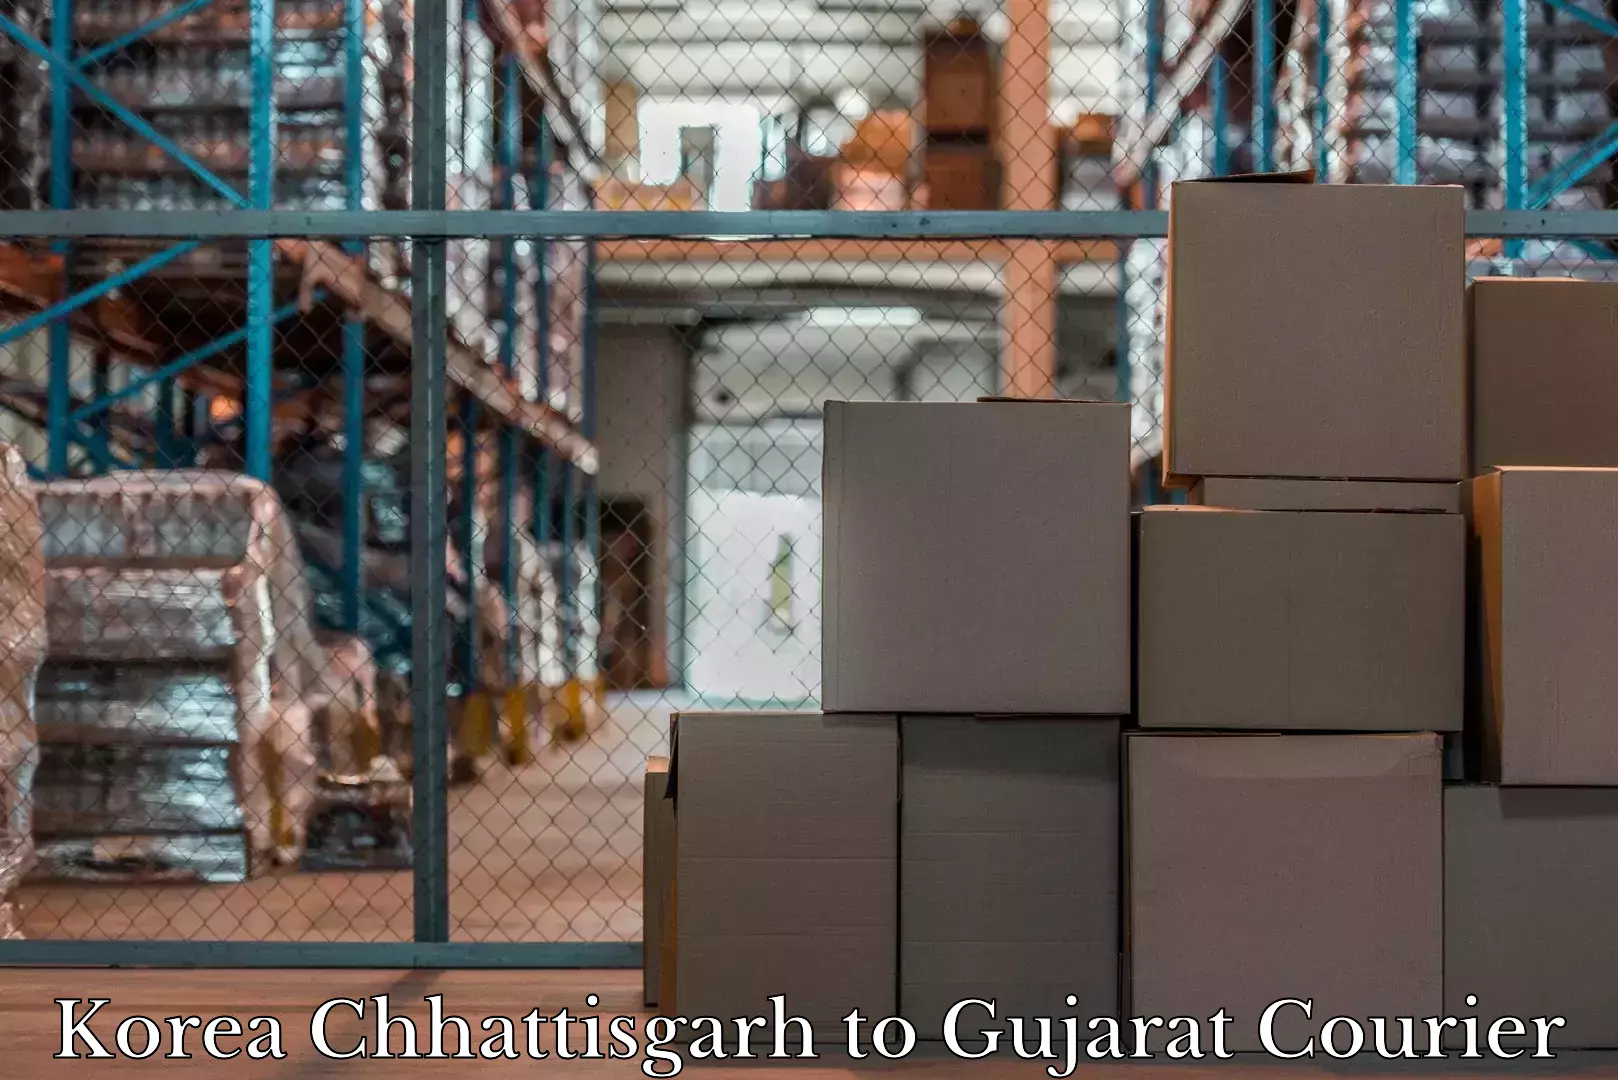 Luggage shipment specialists Korea Chhattisgarh to Gujarat